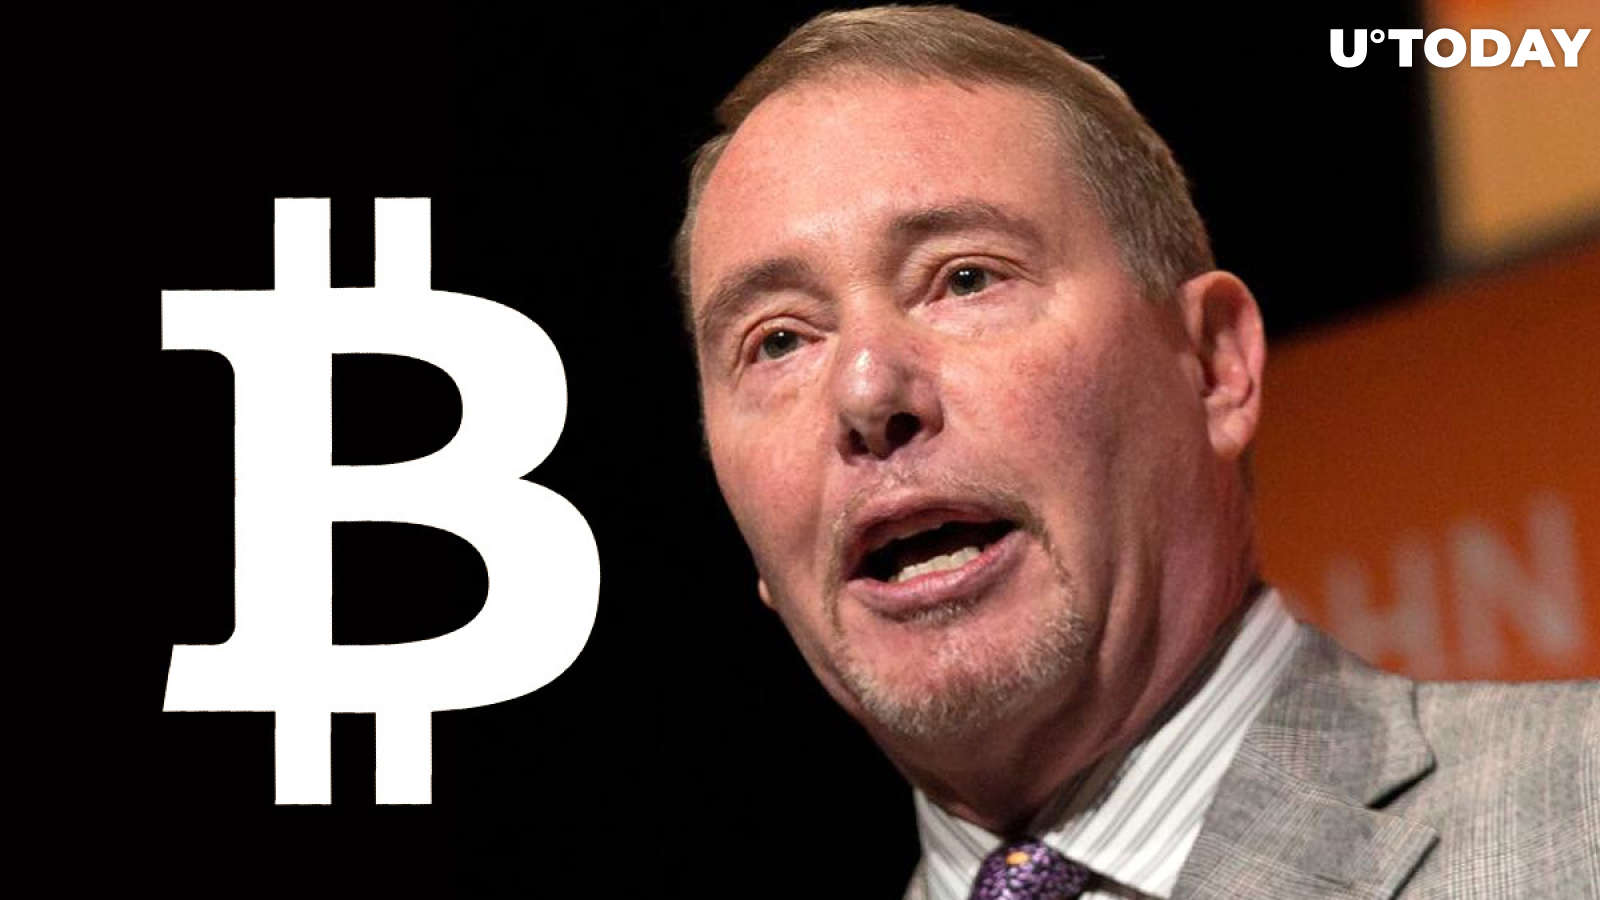 Bitcoin Is a Lie, Says Billionaire Jeffrey Gundlach